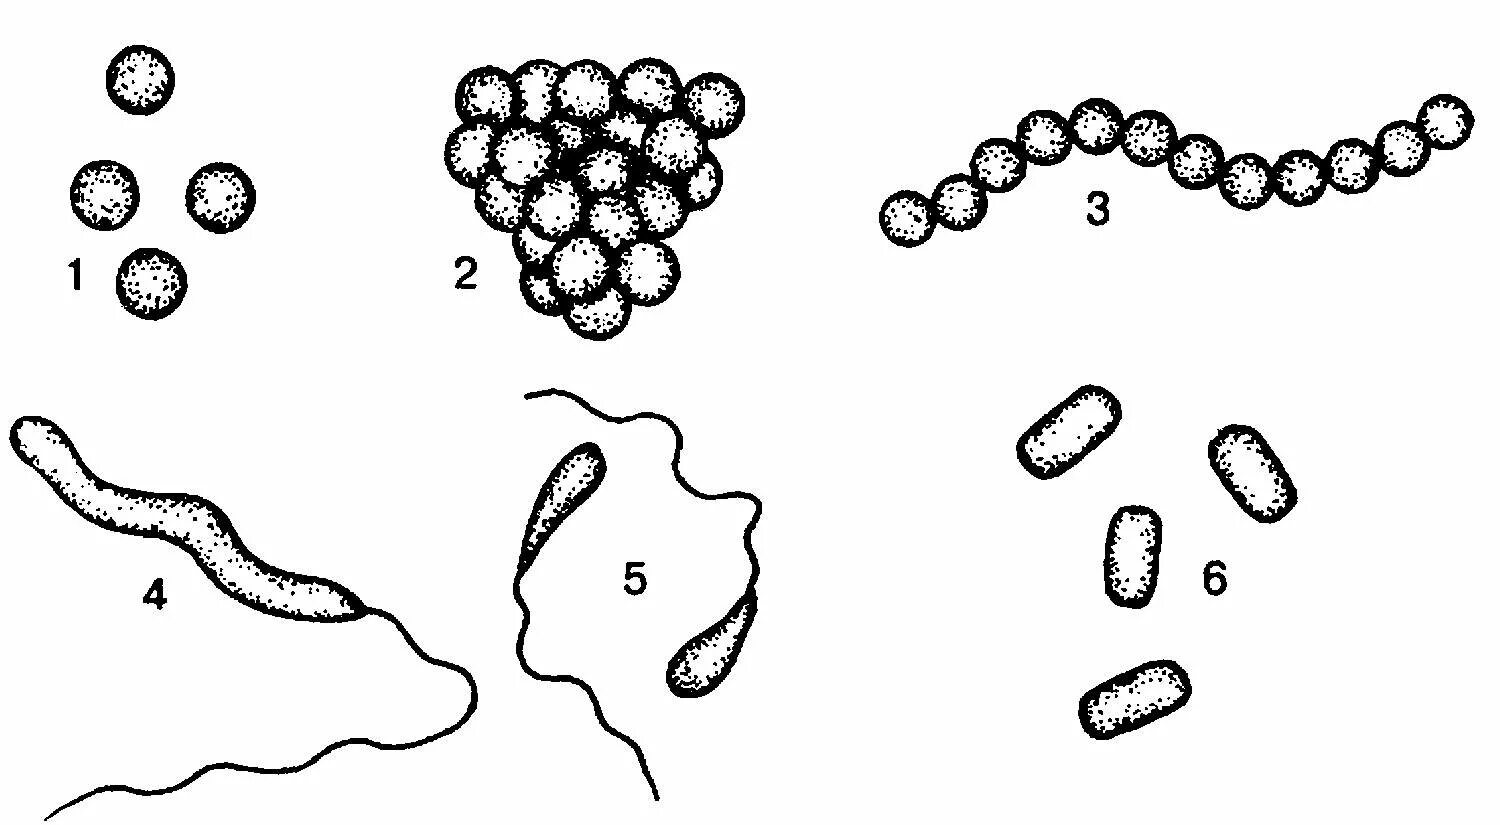 Споры прокариот. Формы клеток бактерий кокки. Формы бактериальных клеток 5 класс. Форма бактерии кокки рисунок. Форма клетки кокки.